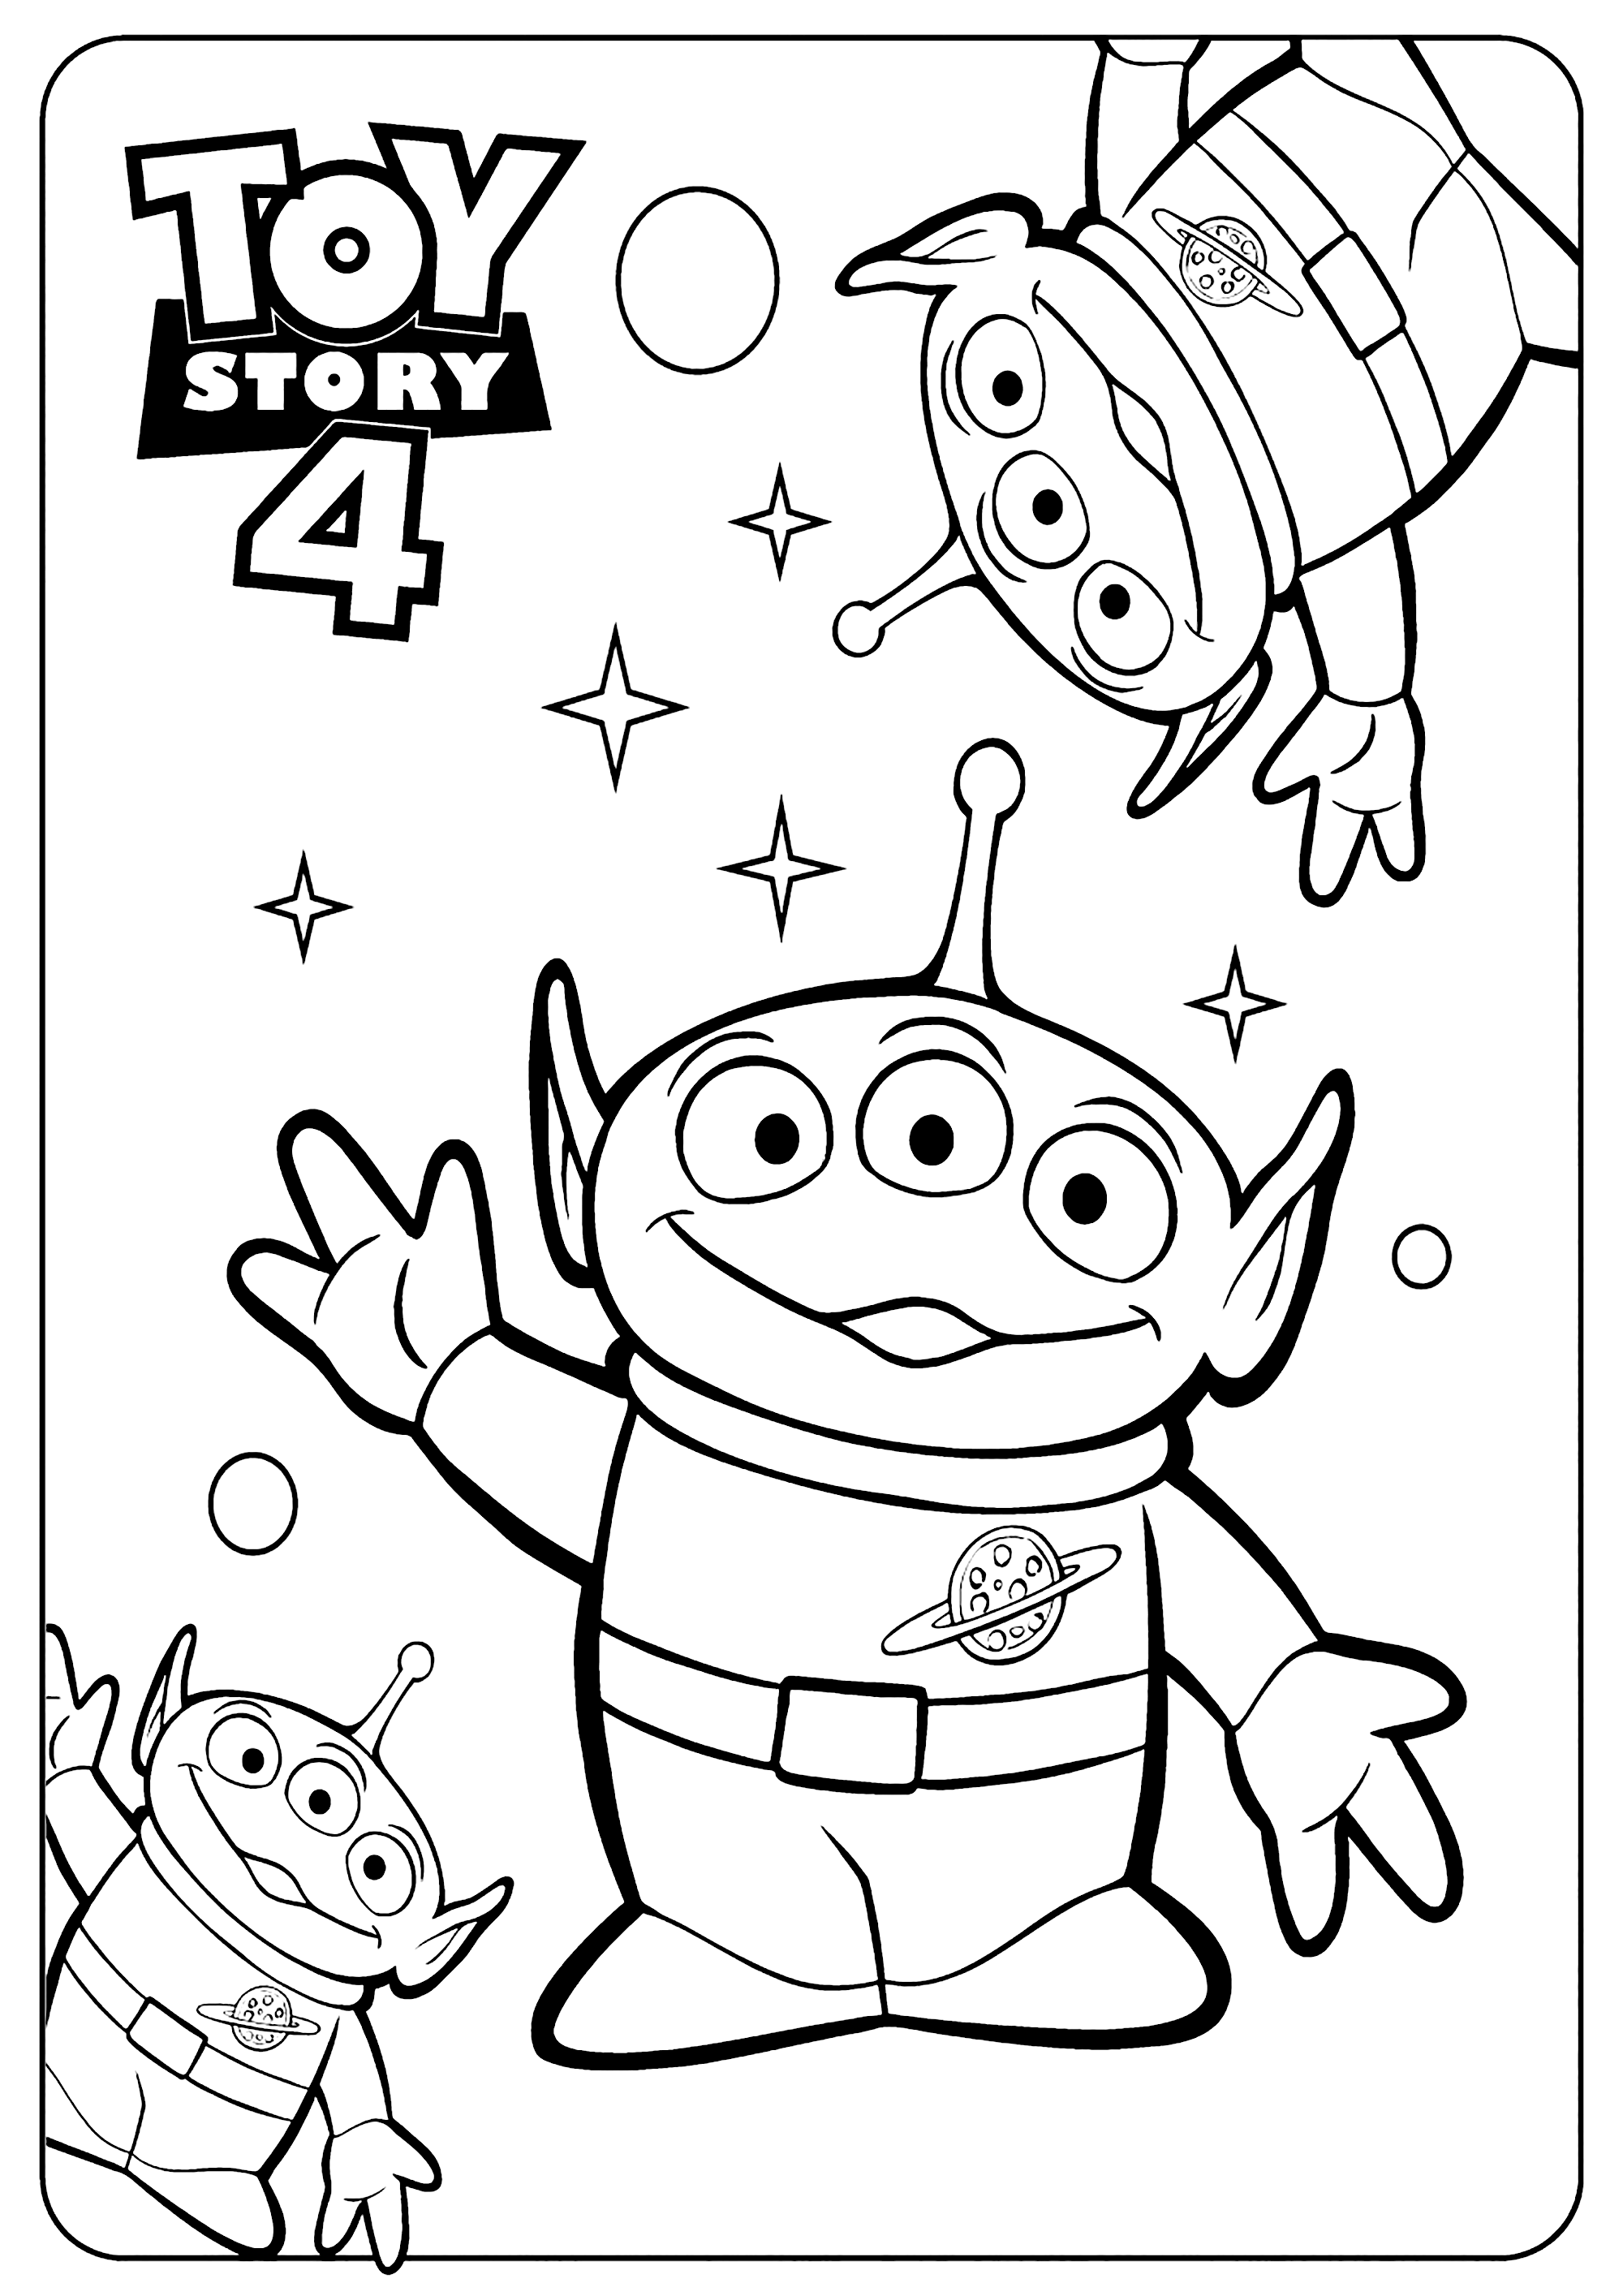 Bo Peep : Toy Story 4 coloring page (Disney / Pixar) - Toy Story 4 Kids ...